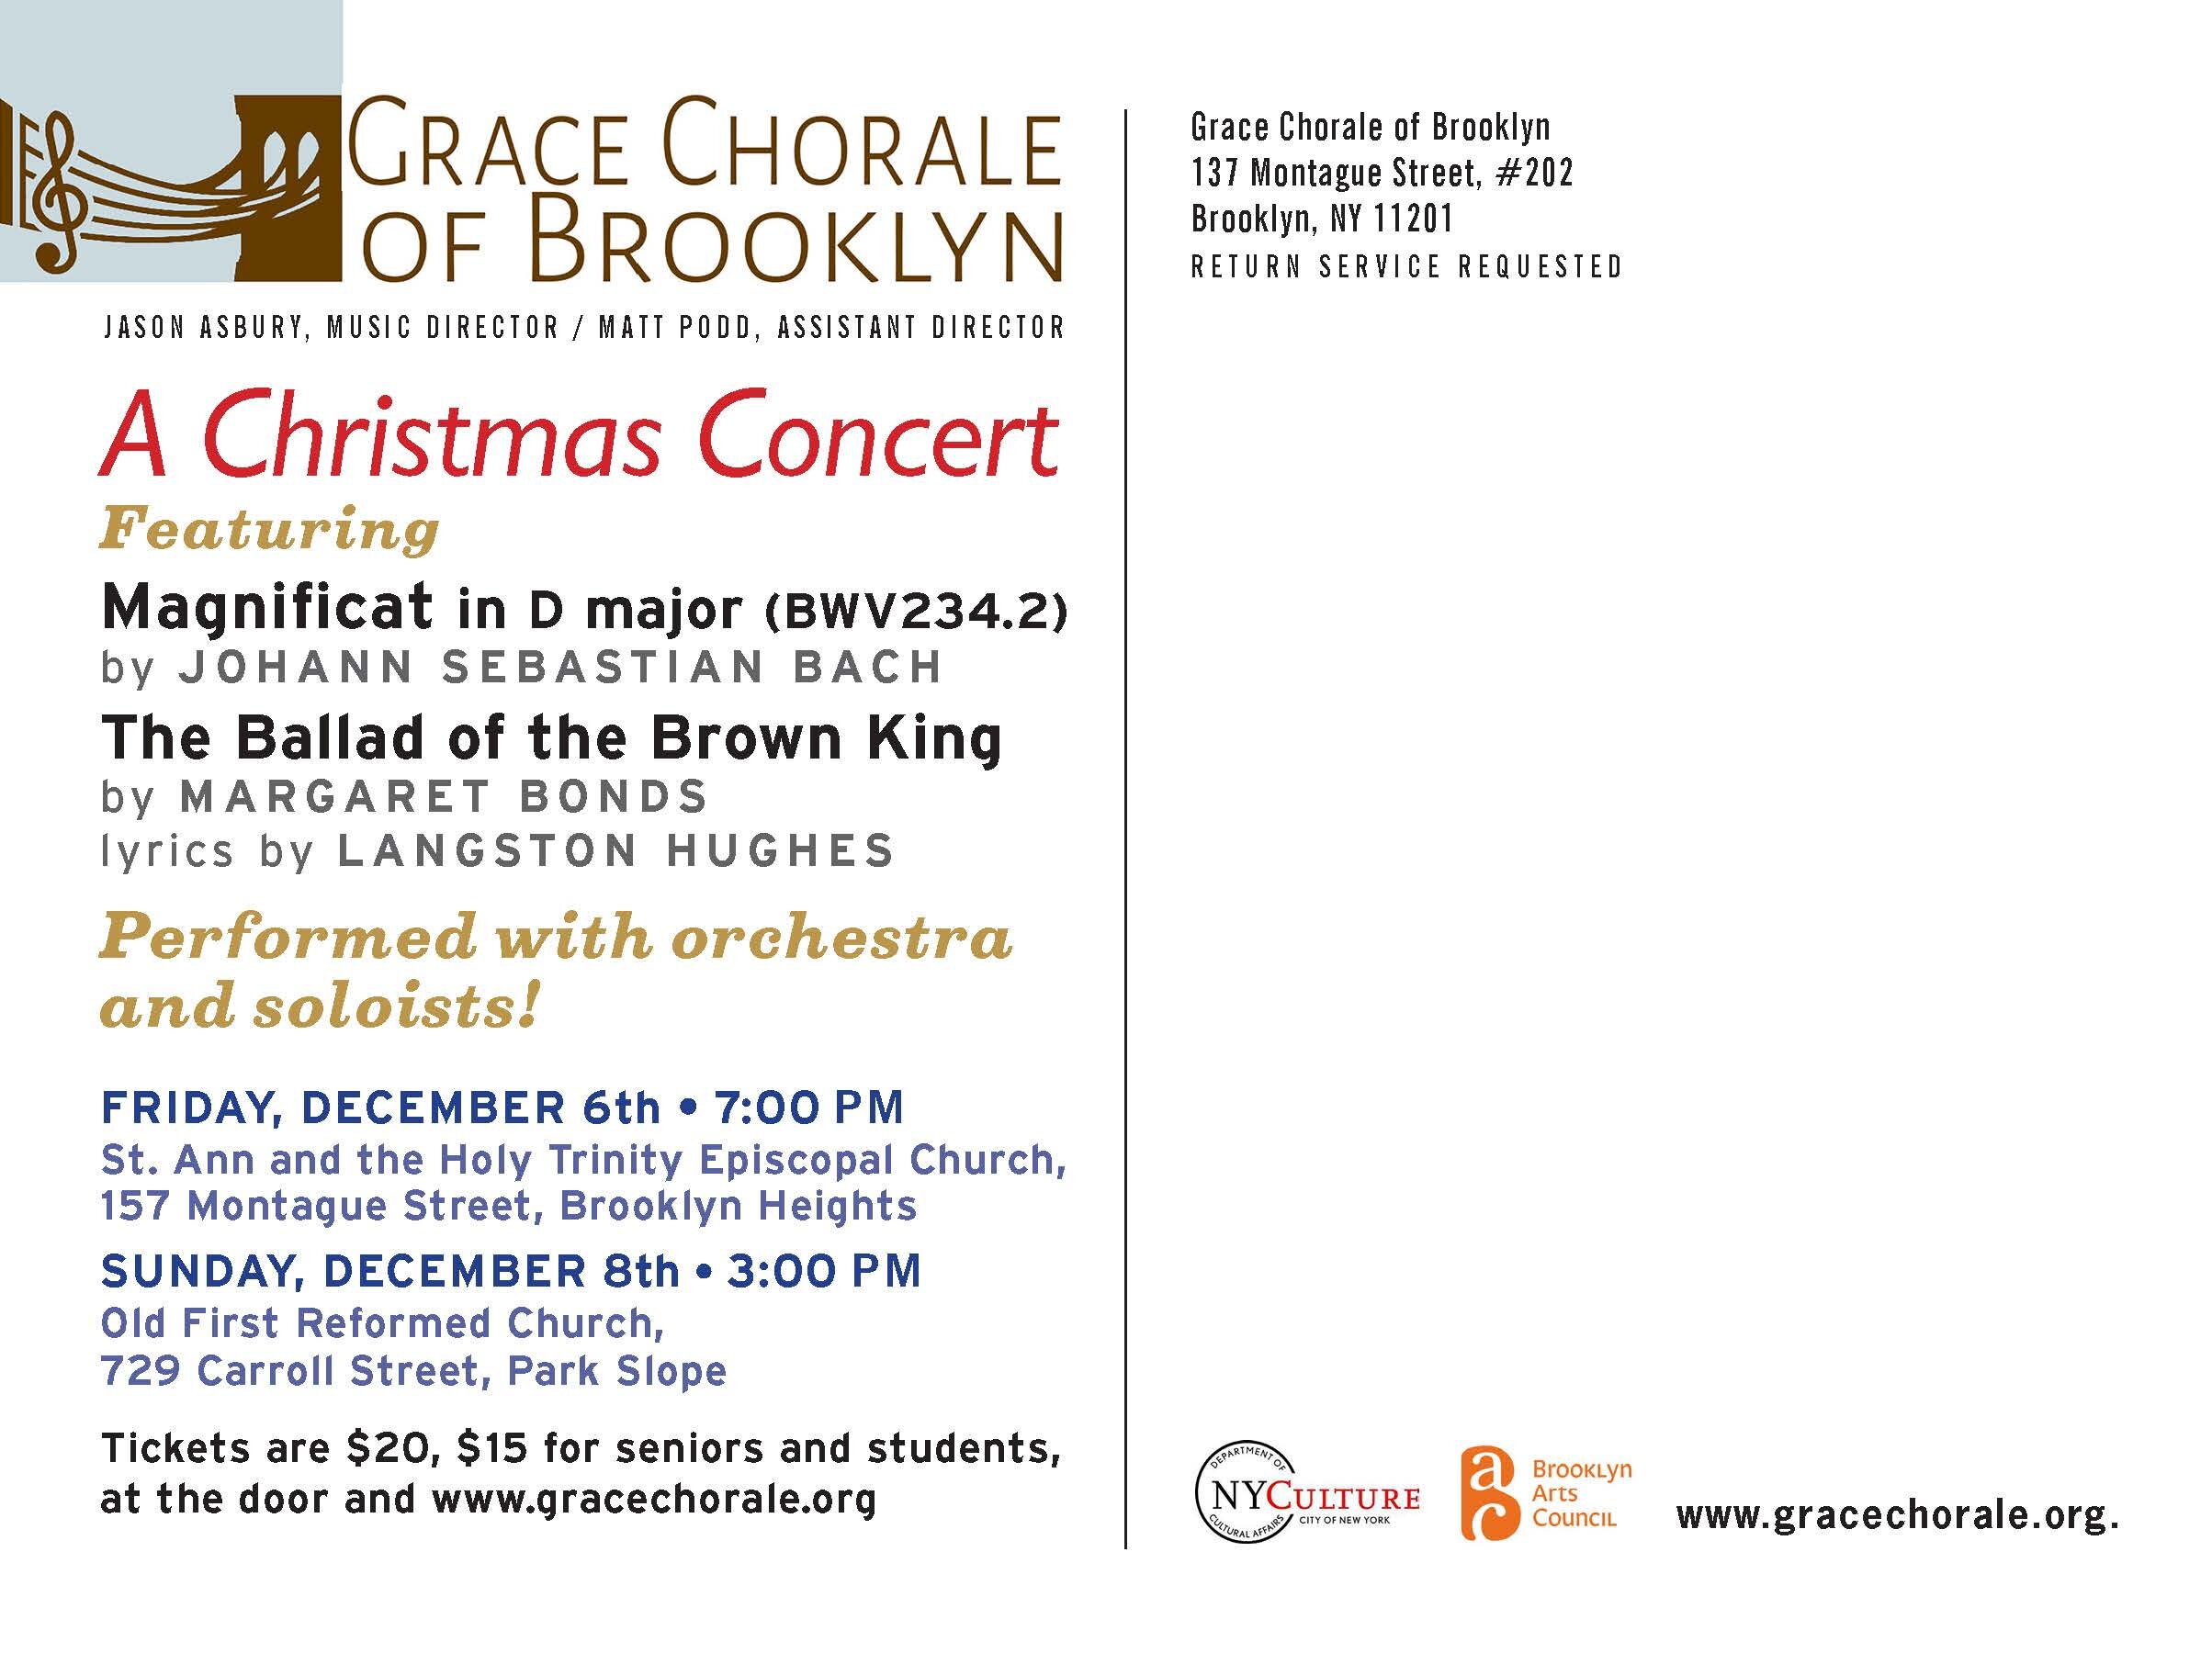 GC Winter 2020 Christmas Concert PC_Page_1.jpg